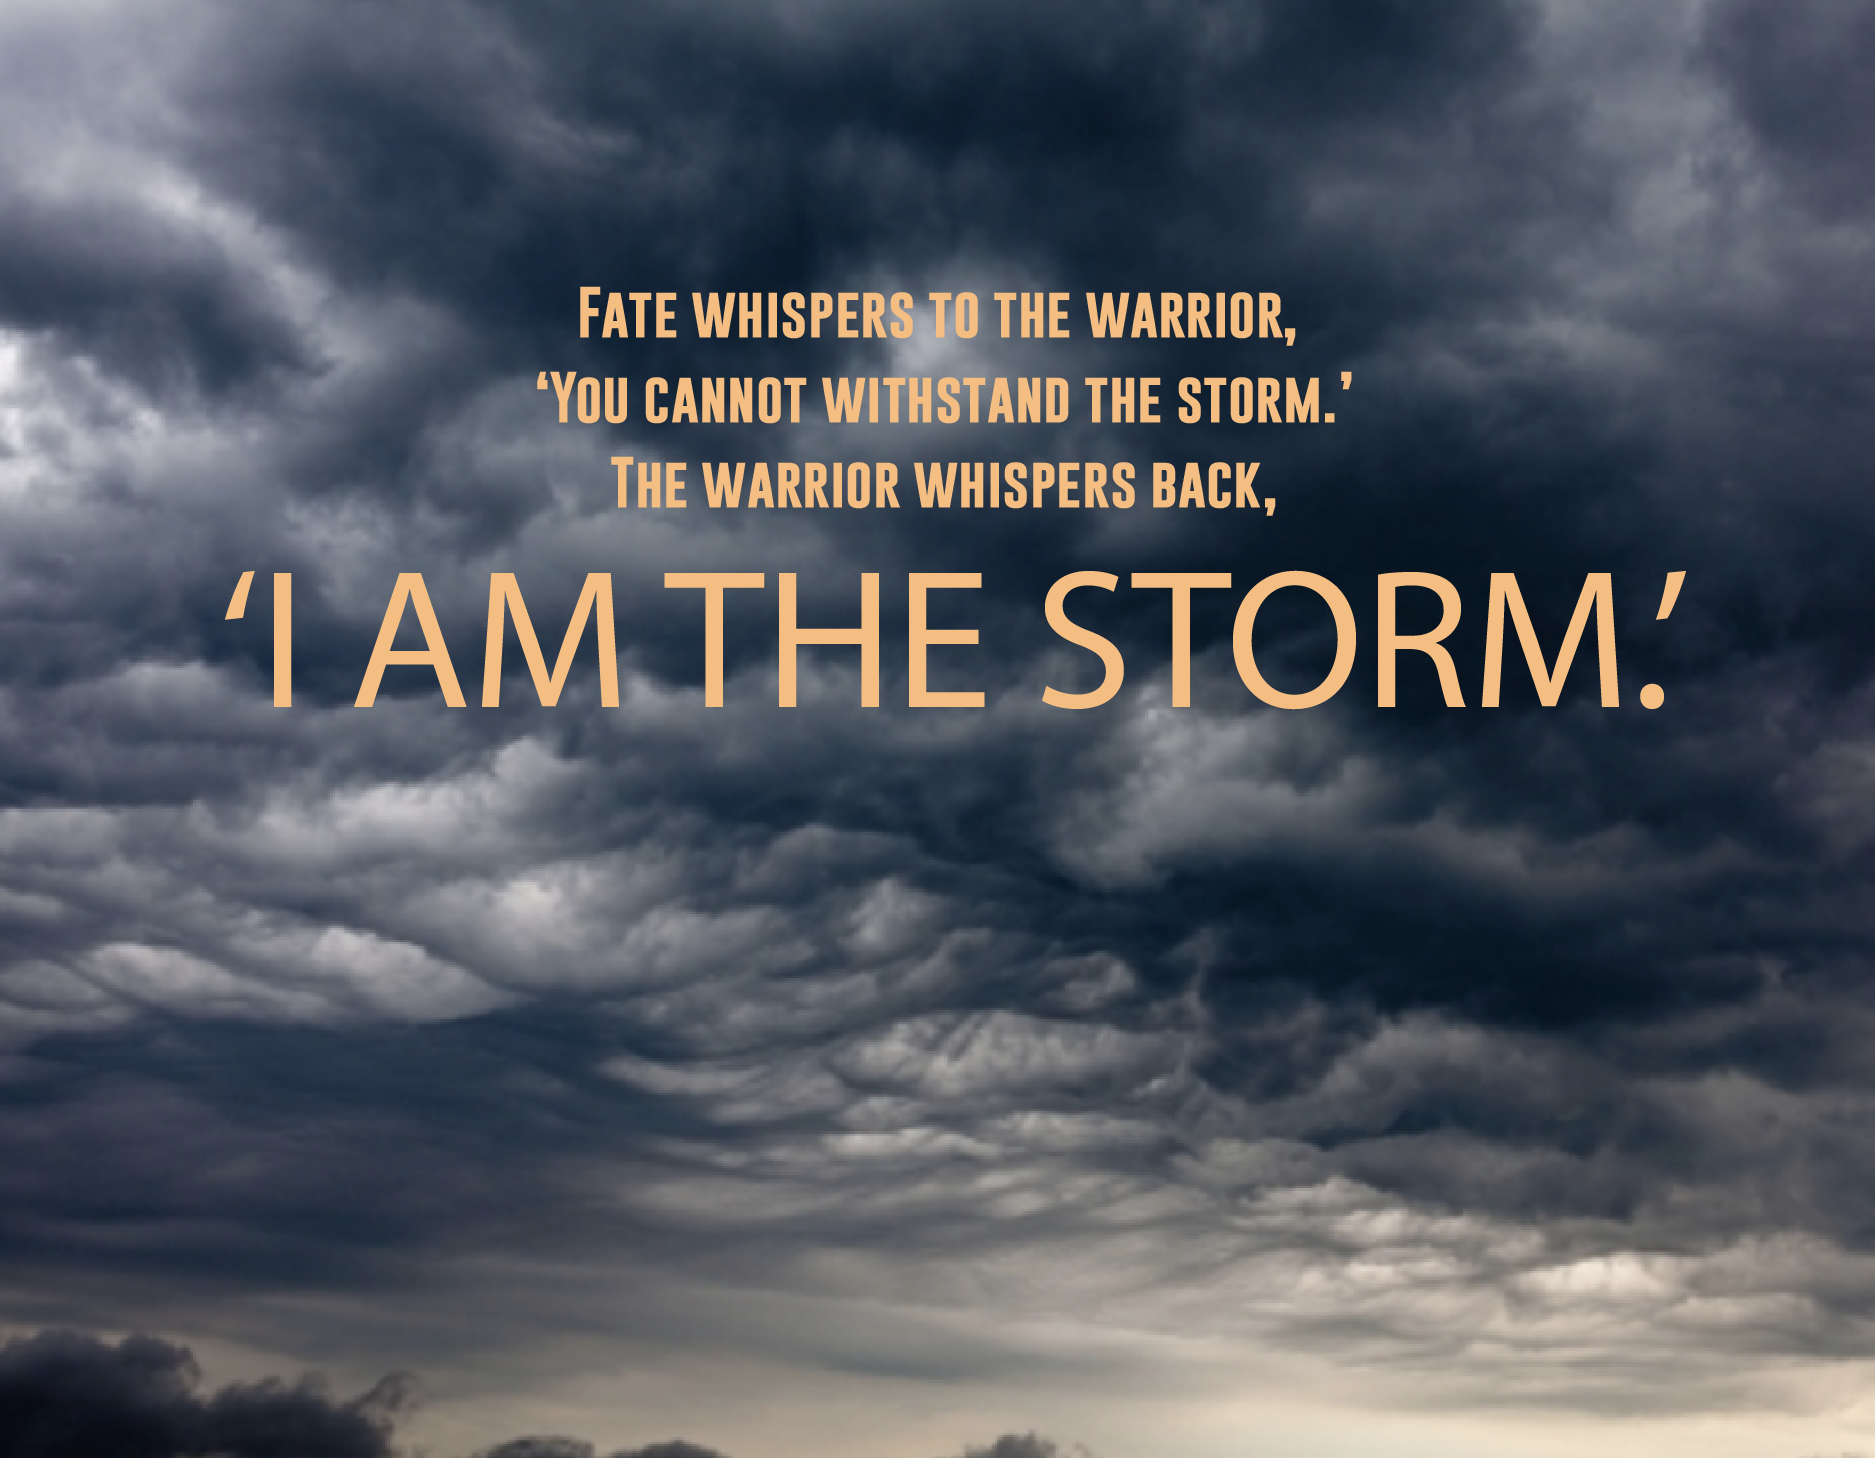 I am the storm image